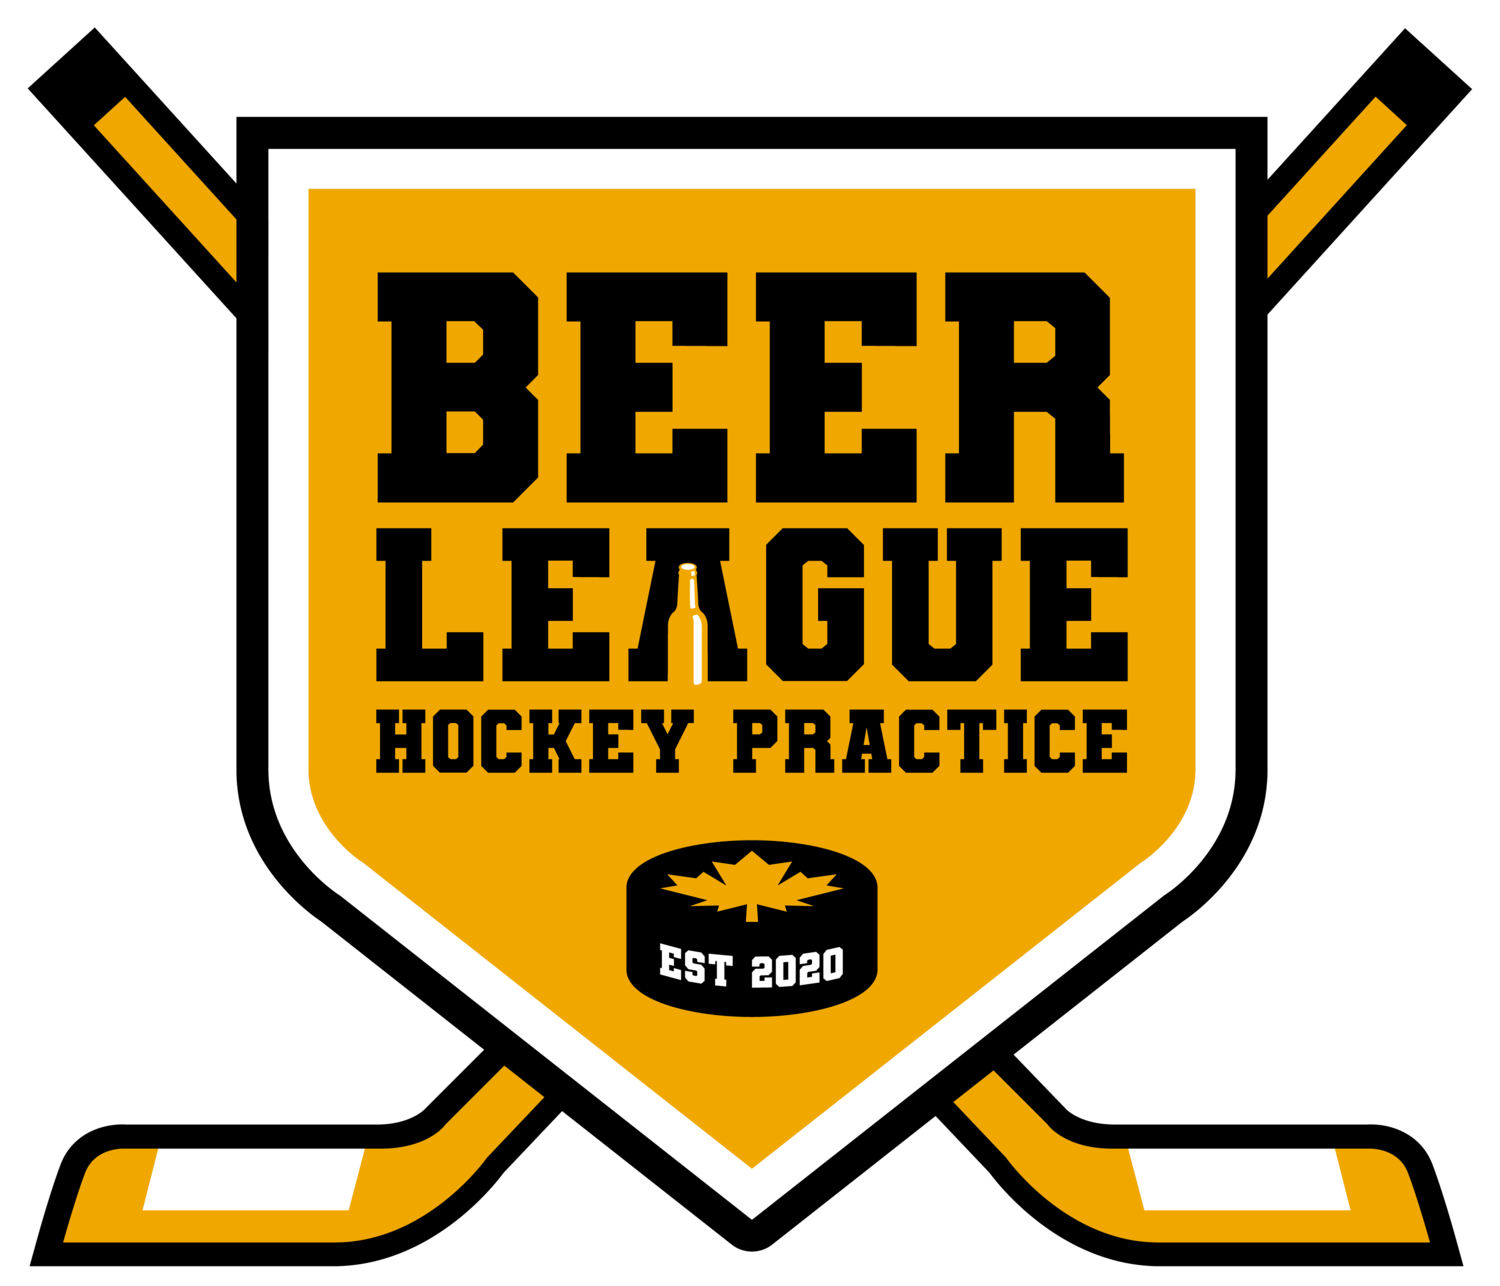 Beer League Hockey Practice